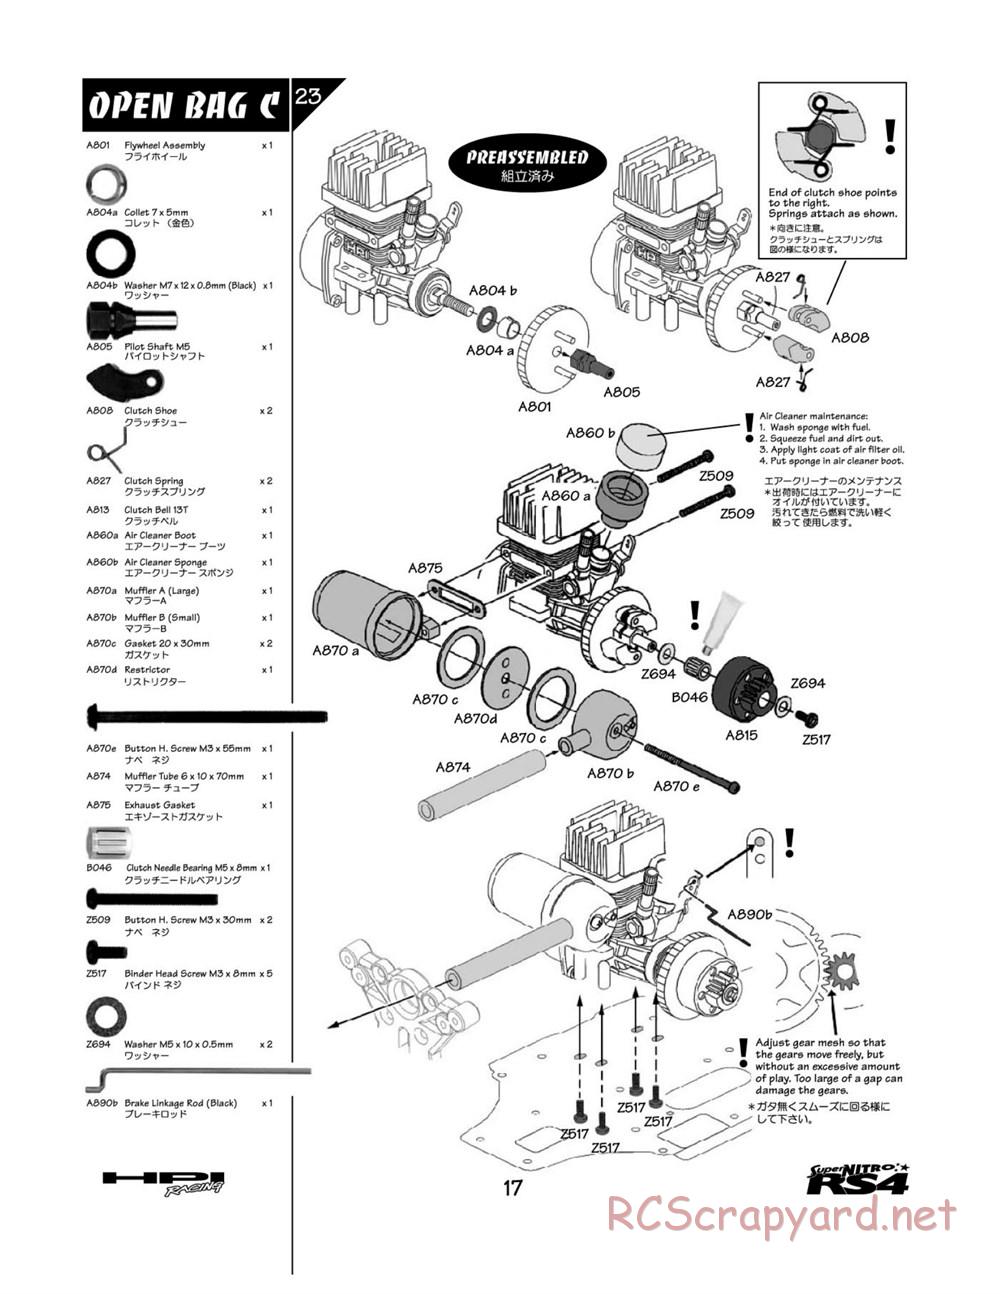 HPI - Super Nitro RS4 - Manual - Page 17